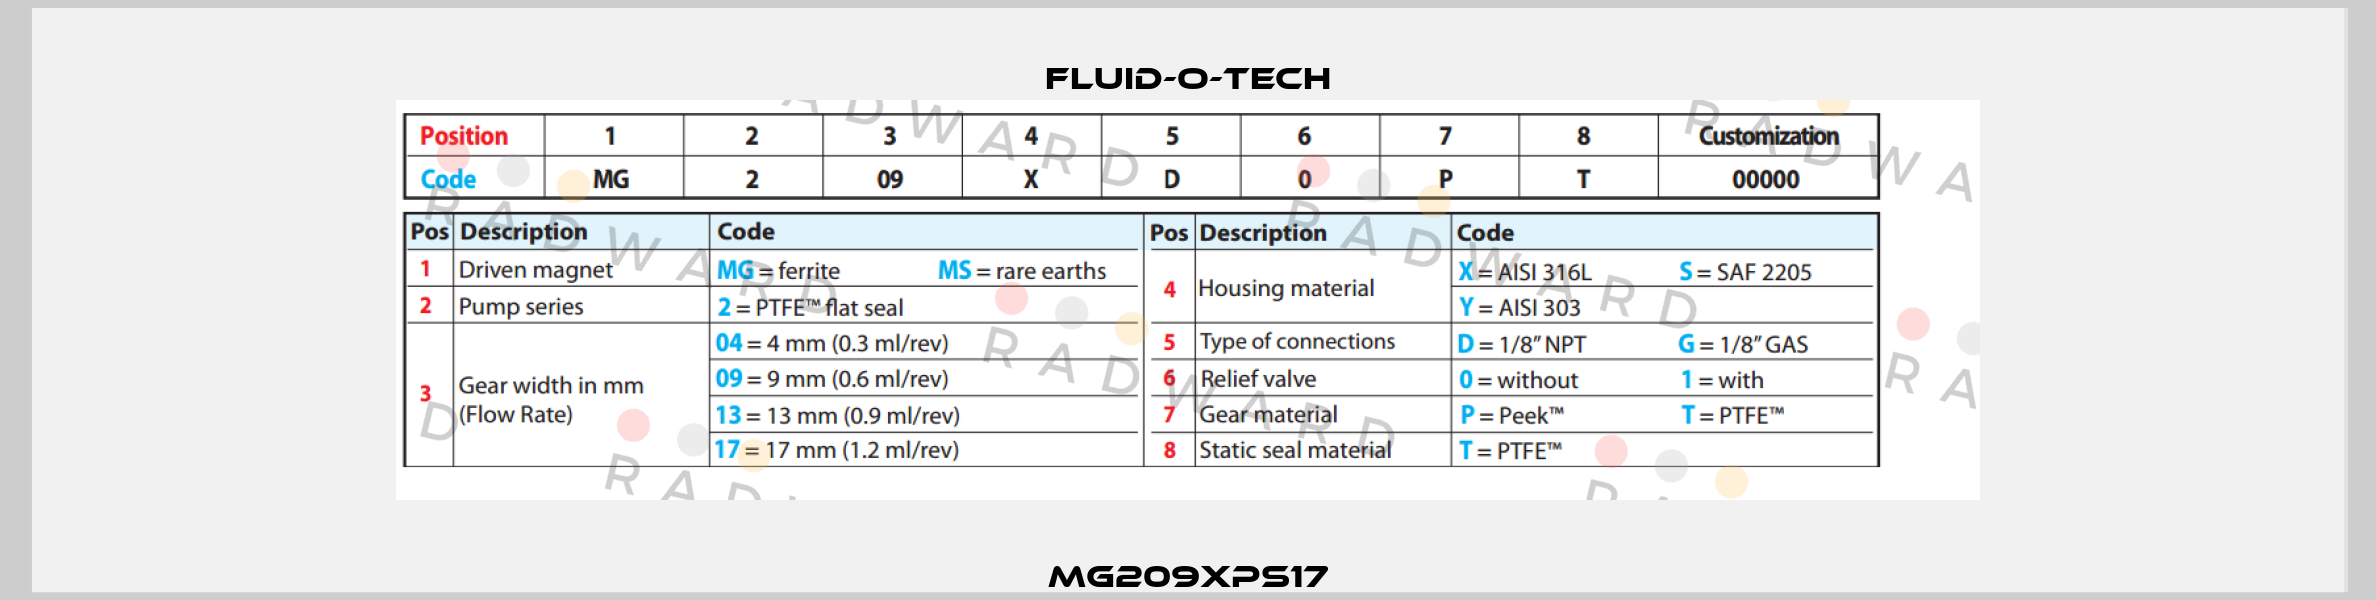 MG209XPS17 Fluid-O-Tech